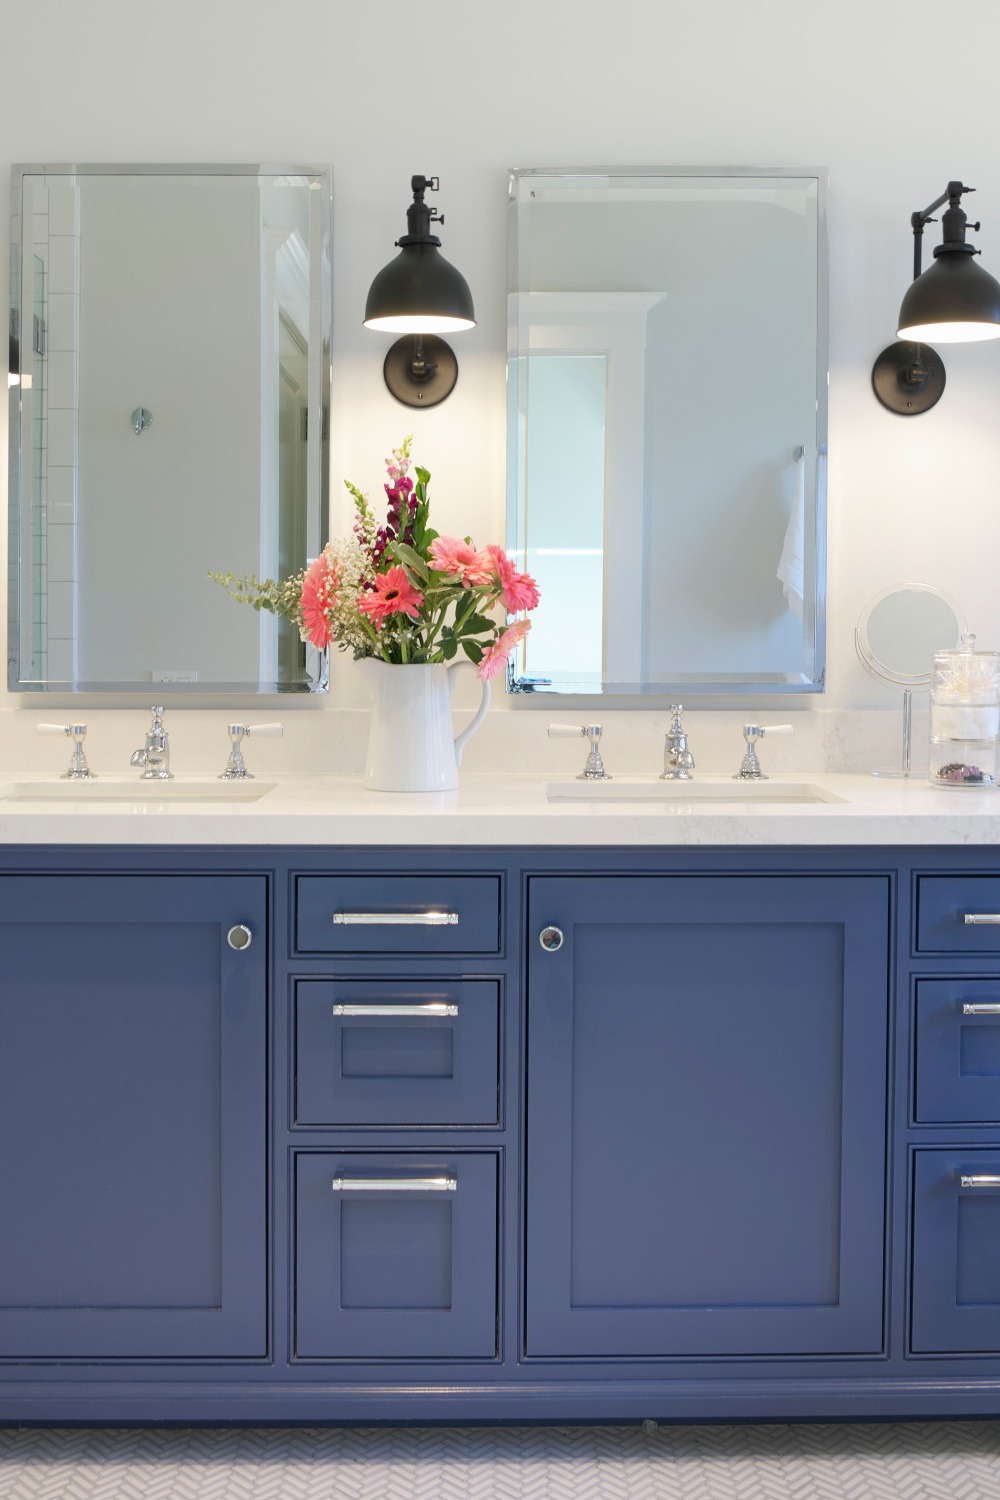 White Quartz Countertops Backsplash Blue Cabinets Mosaic Tile Floor